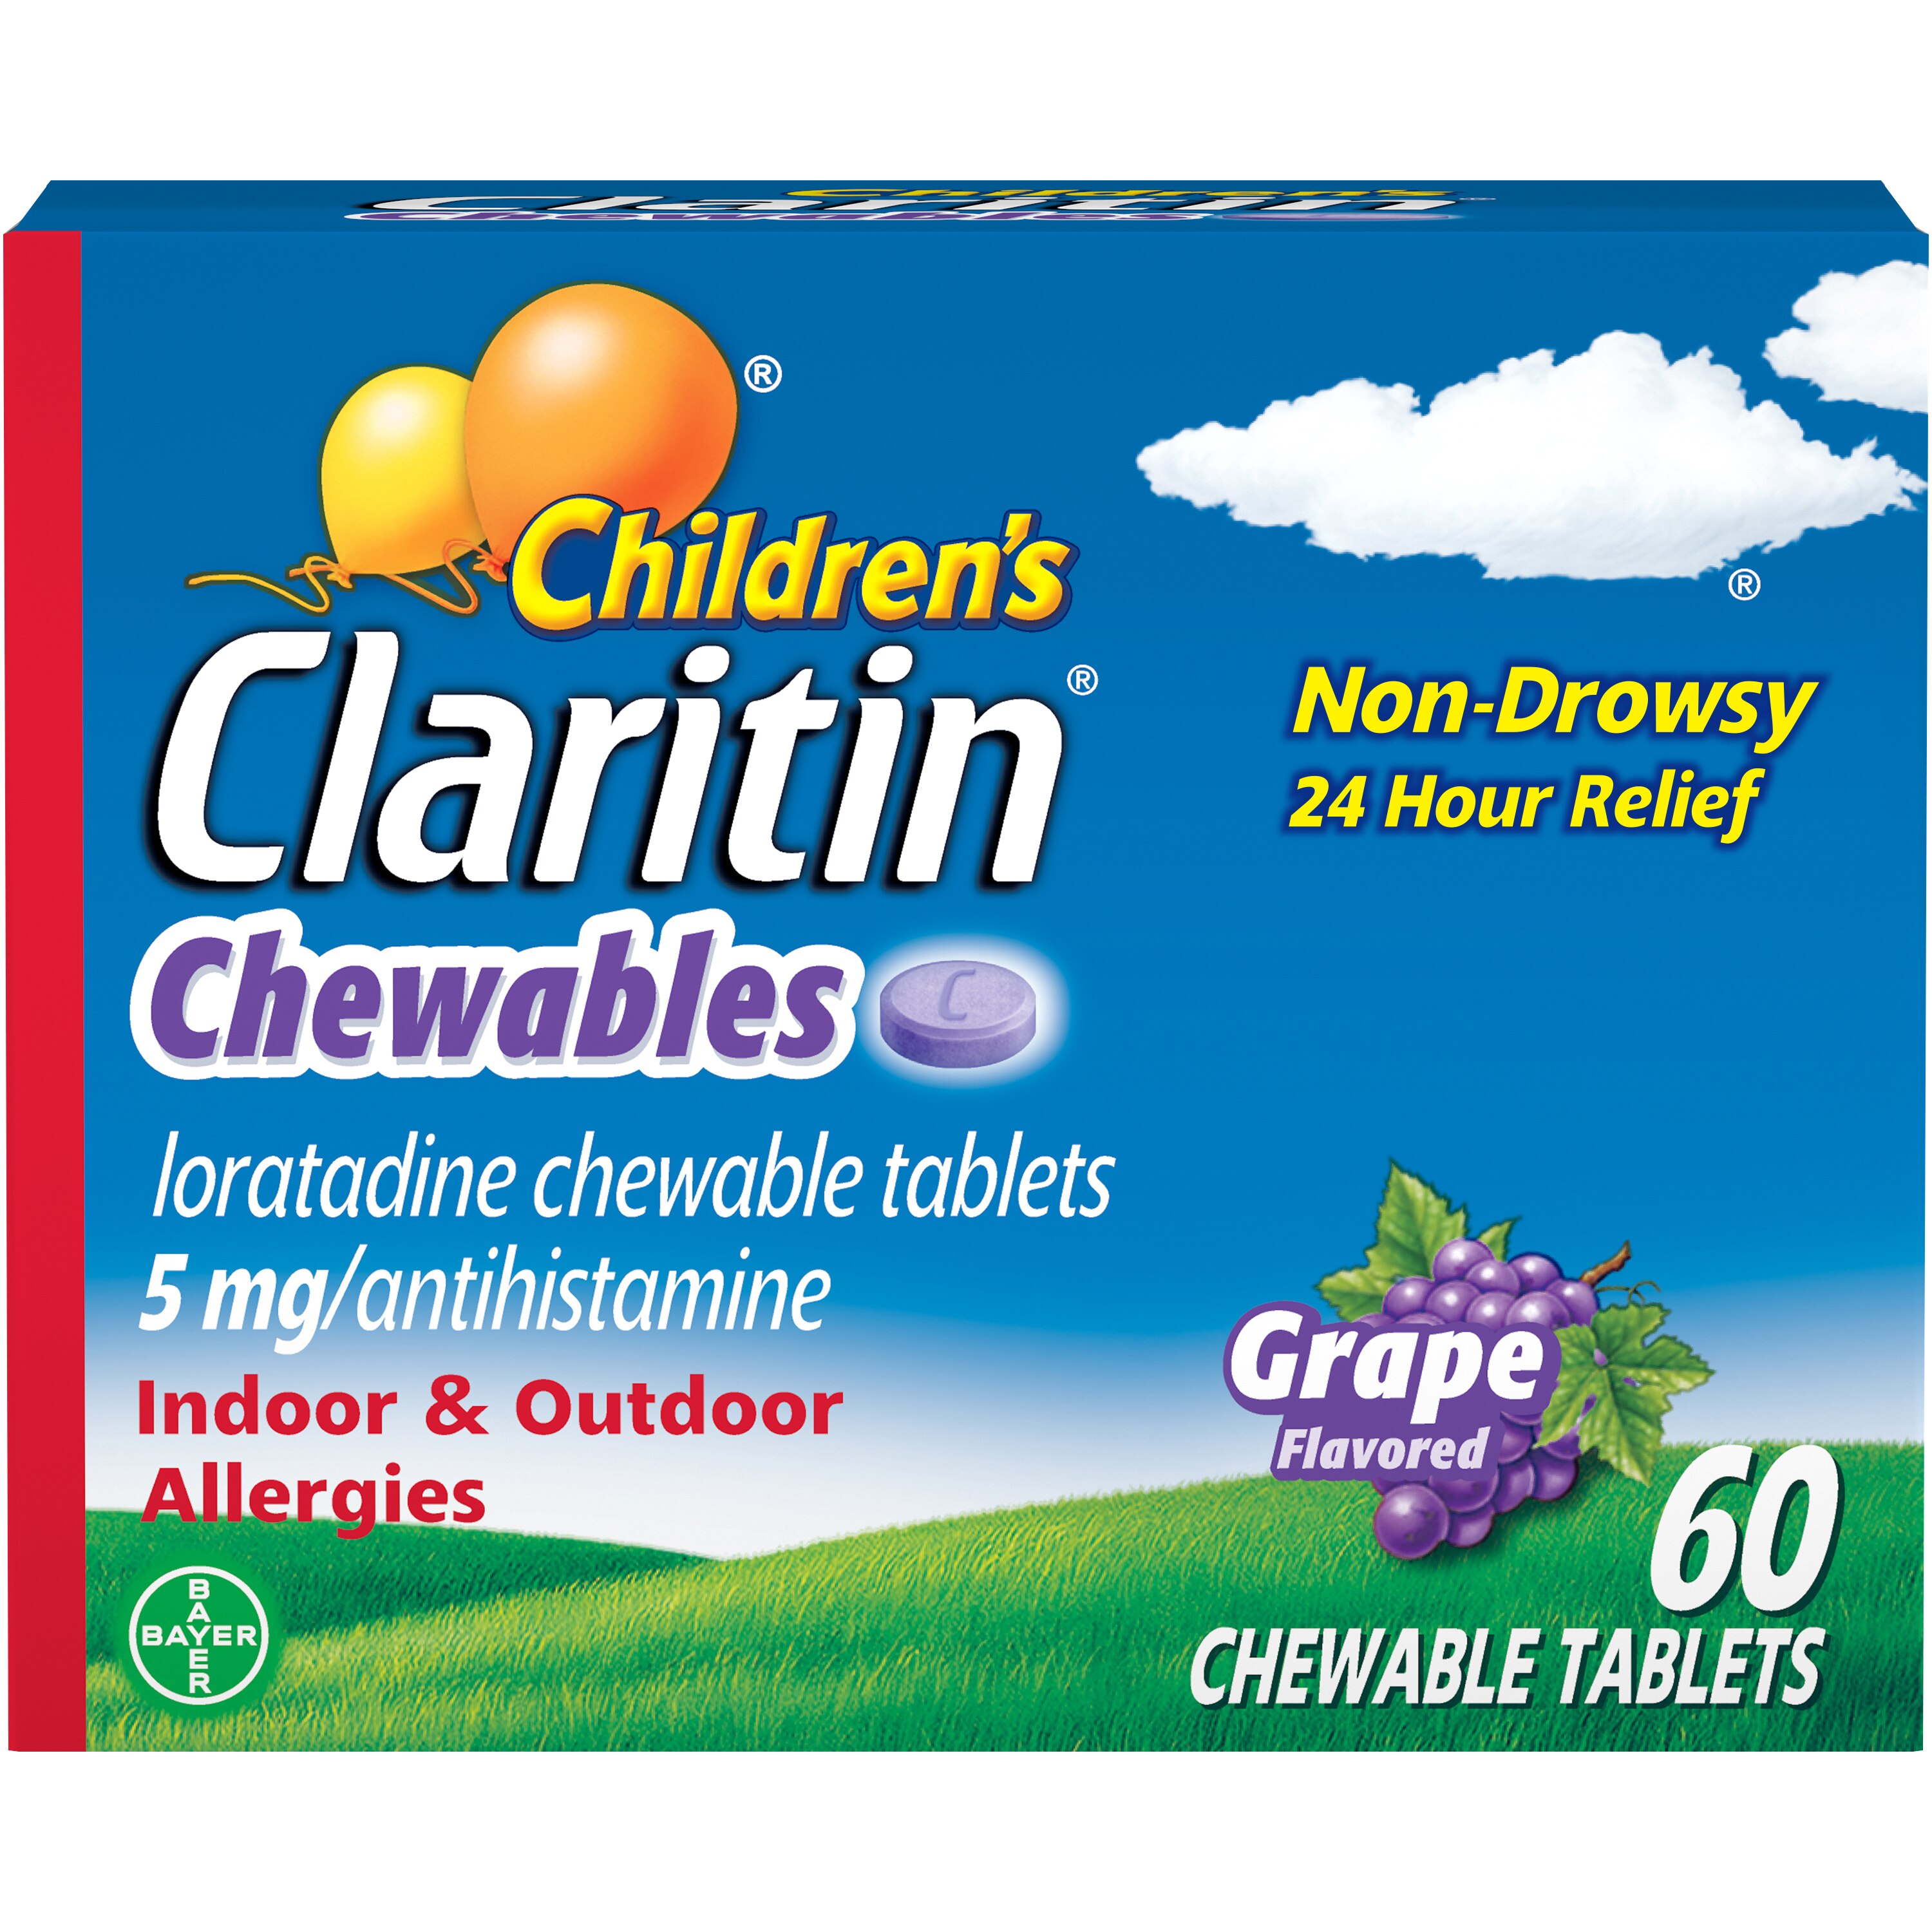  Claritin Children's 24 Hour Chewable Allergy Medicine for Kids, Non-Drowsy Allergy Relief, Loratadine Antihistamine, Grape Flavored Tablets, 60 Count 